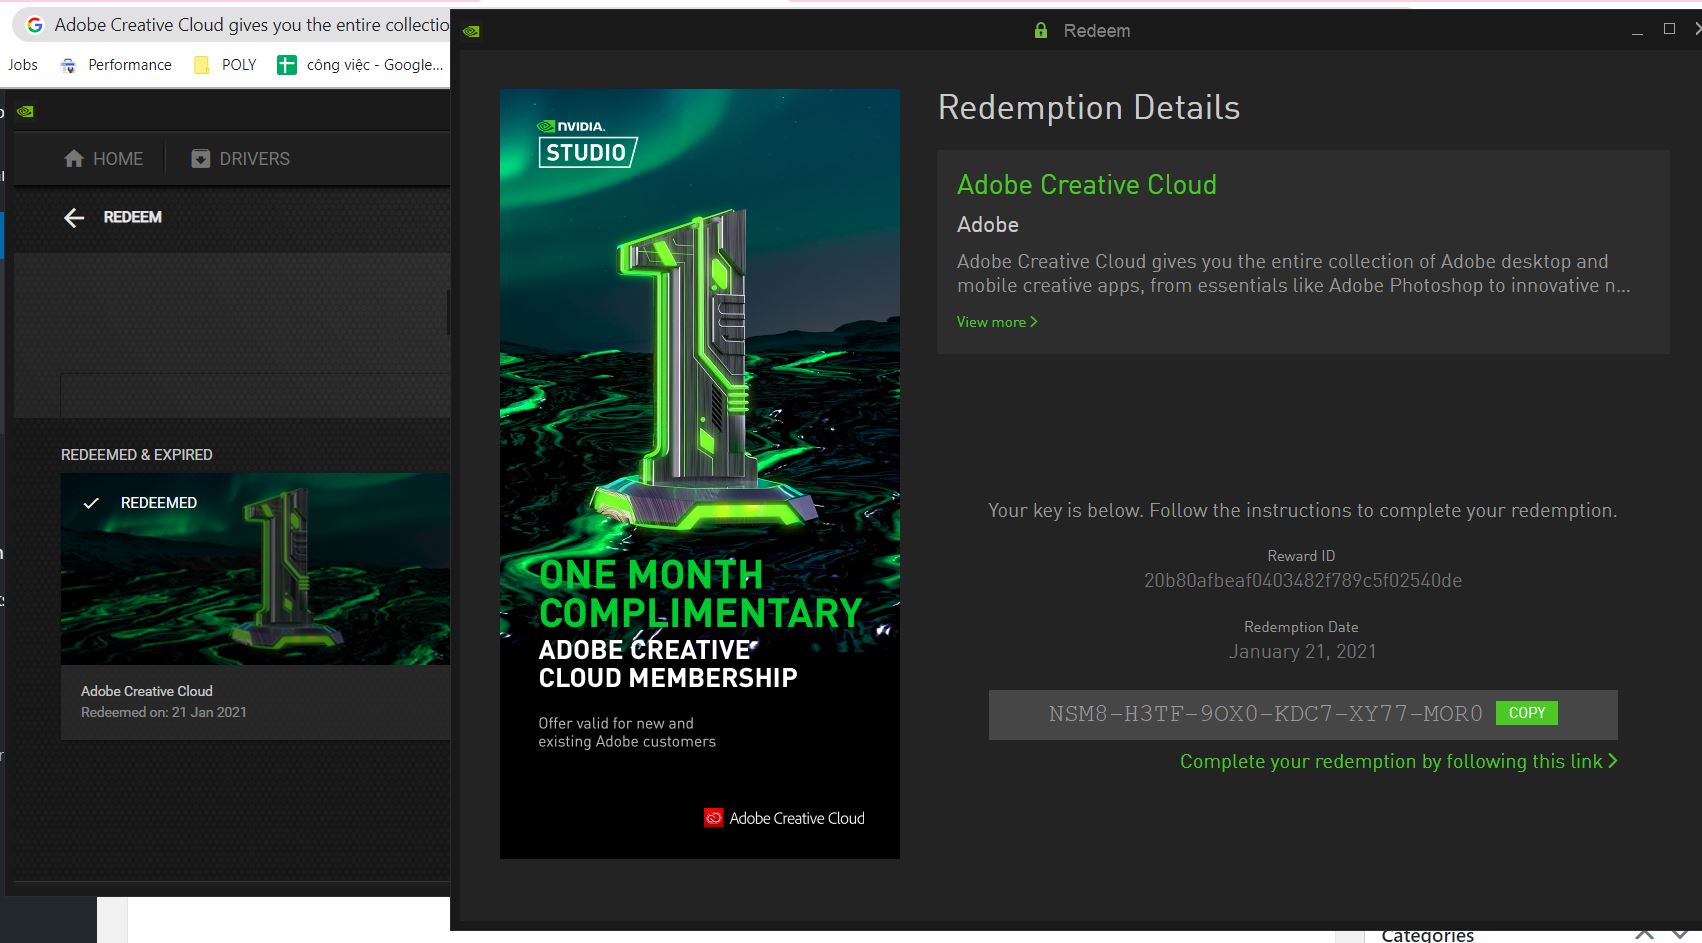 Adobe membership offers 1 month of free Adobe membership to Nvidia users